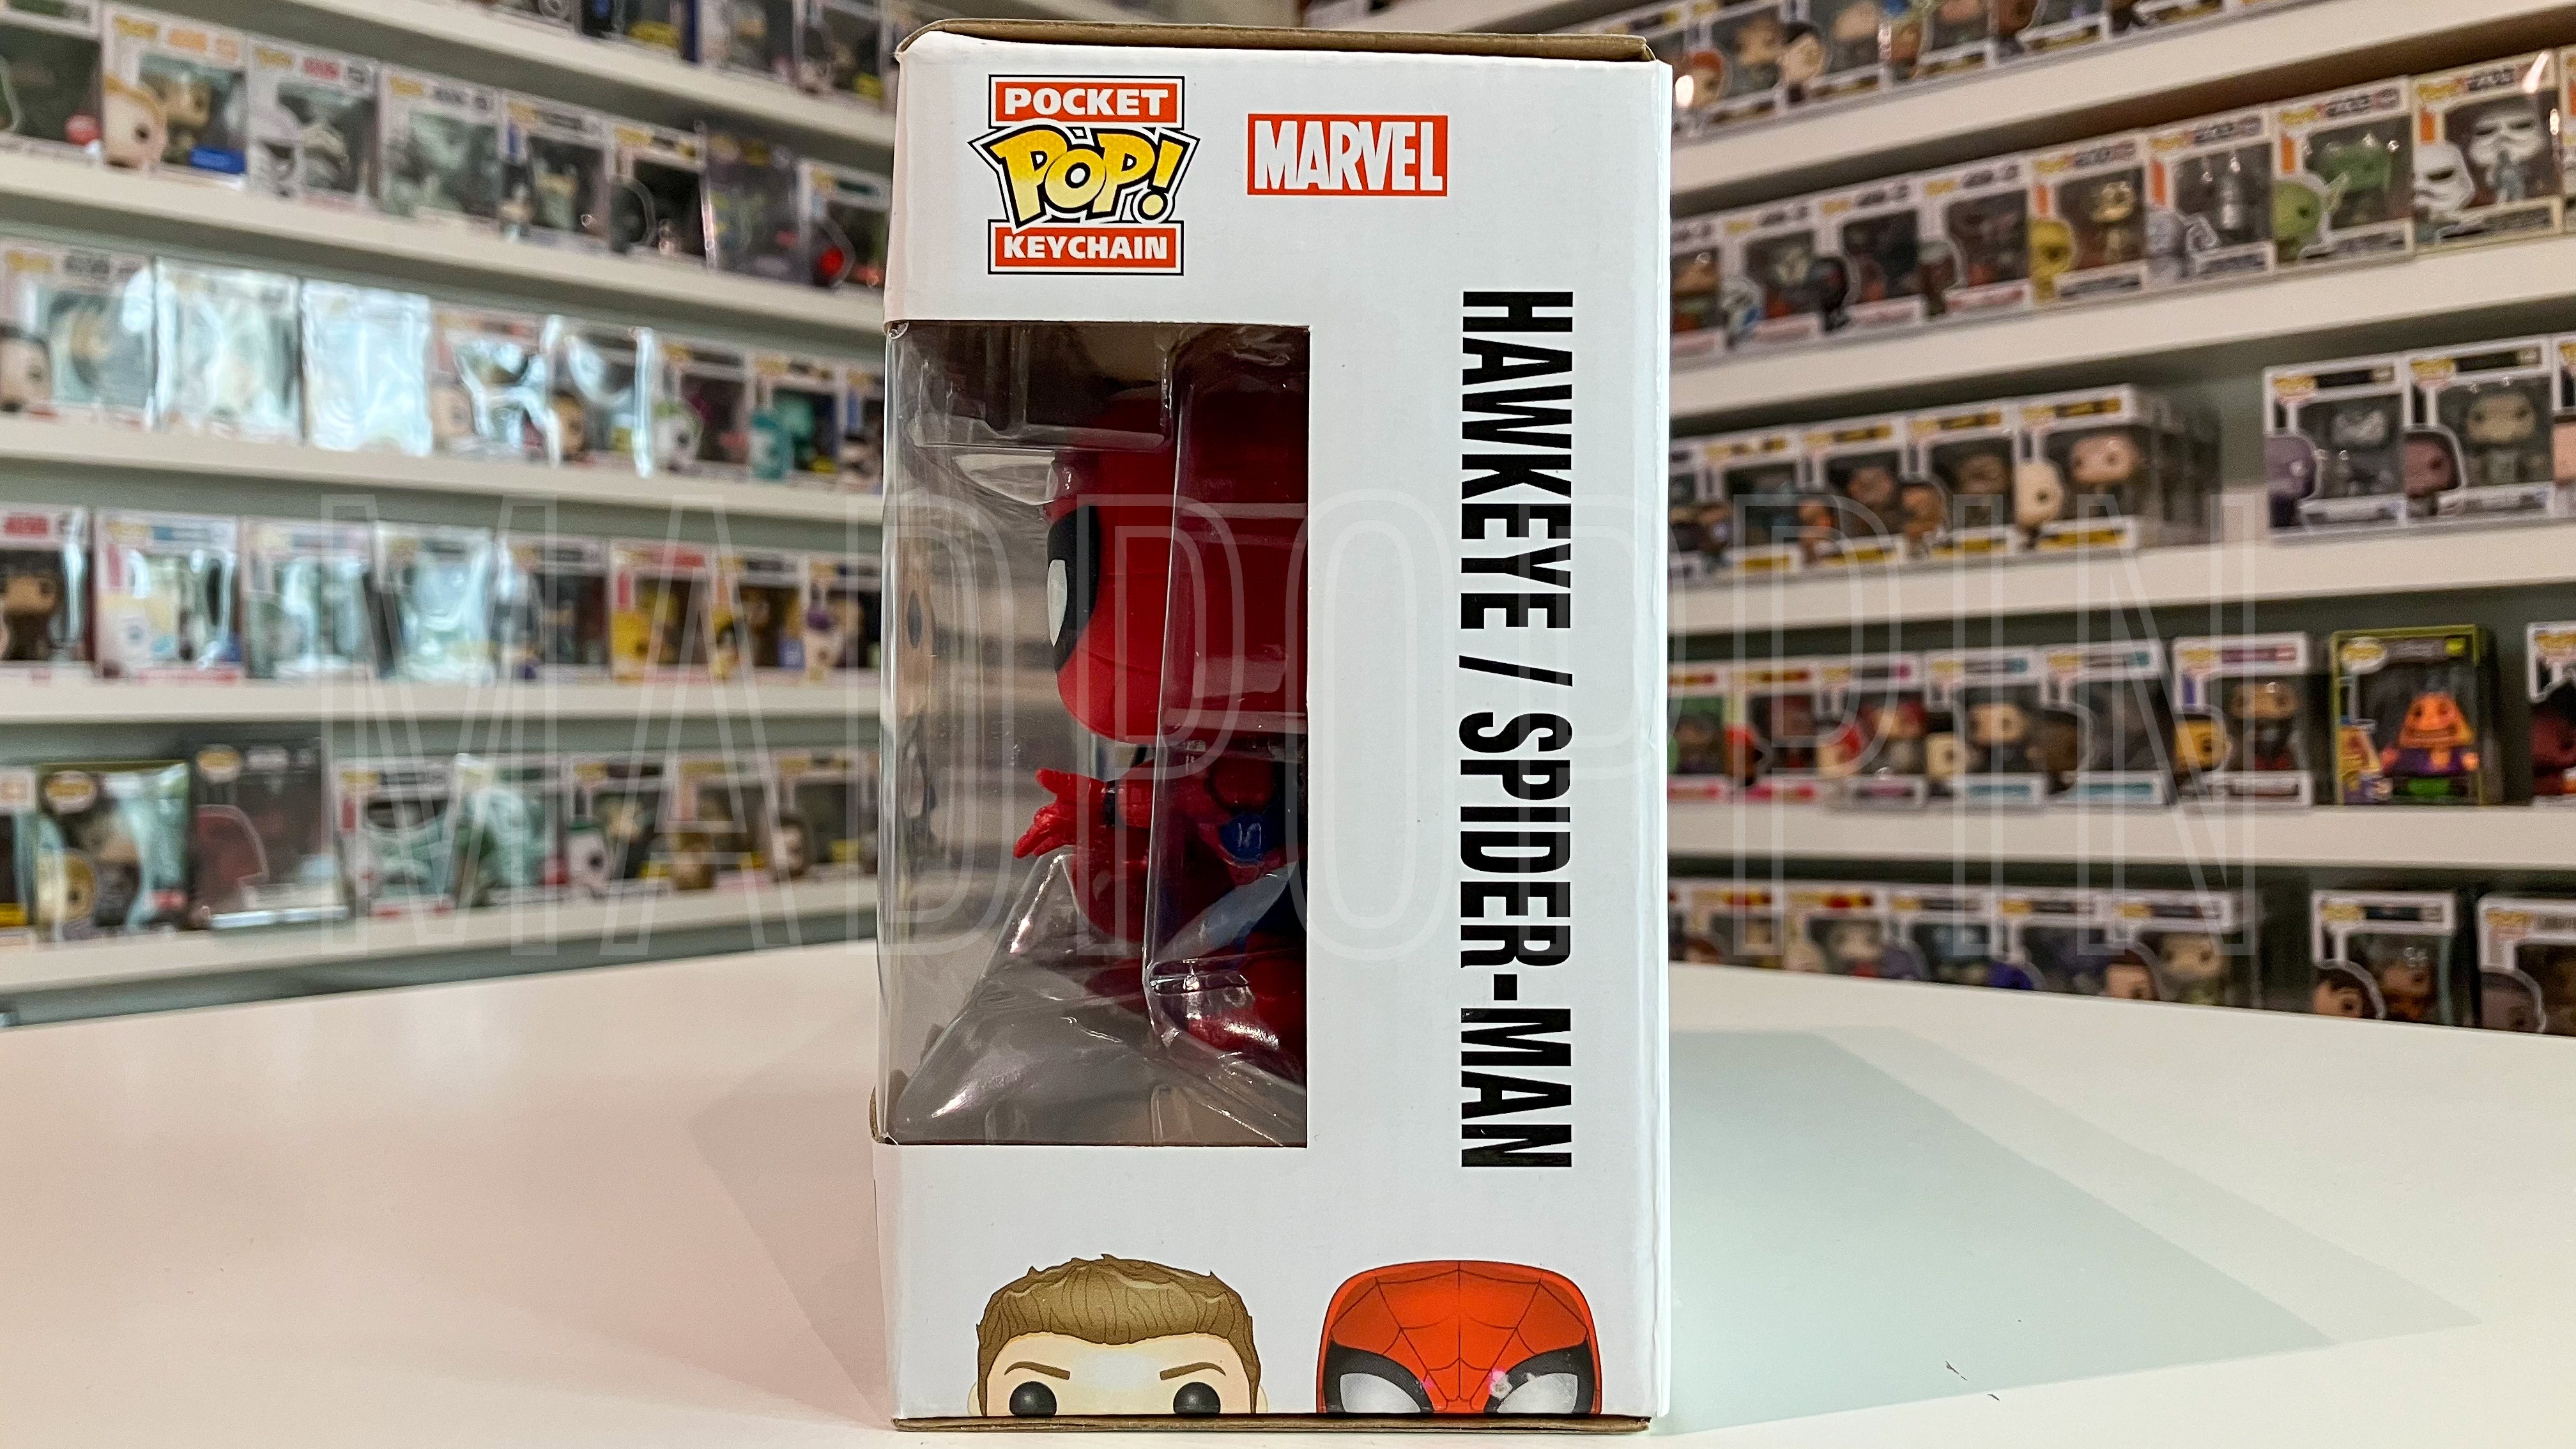 Funko POP! Marvel Civil War Captain America Iron Man Hawkeye Spider-Man 4 Pack